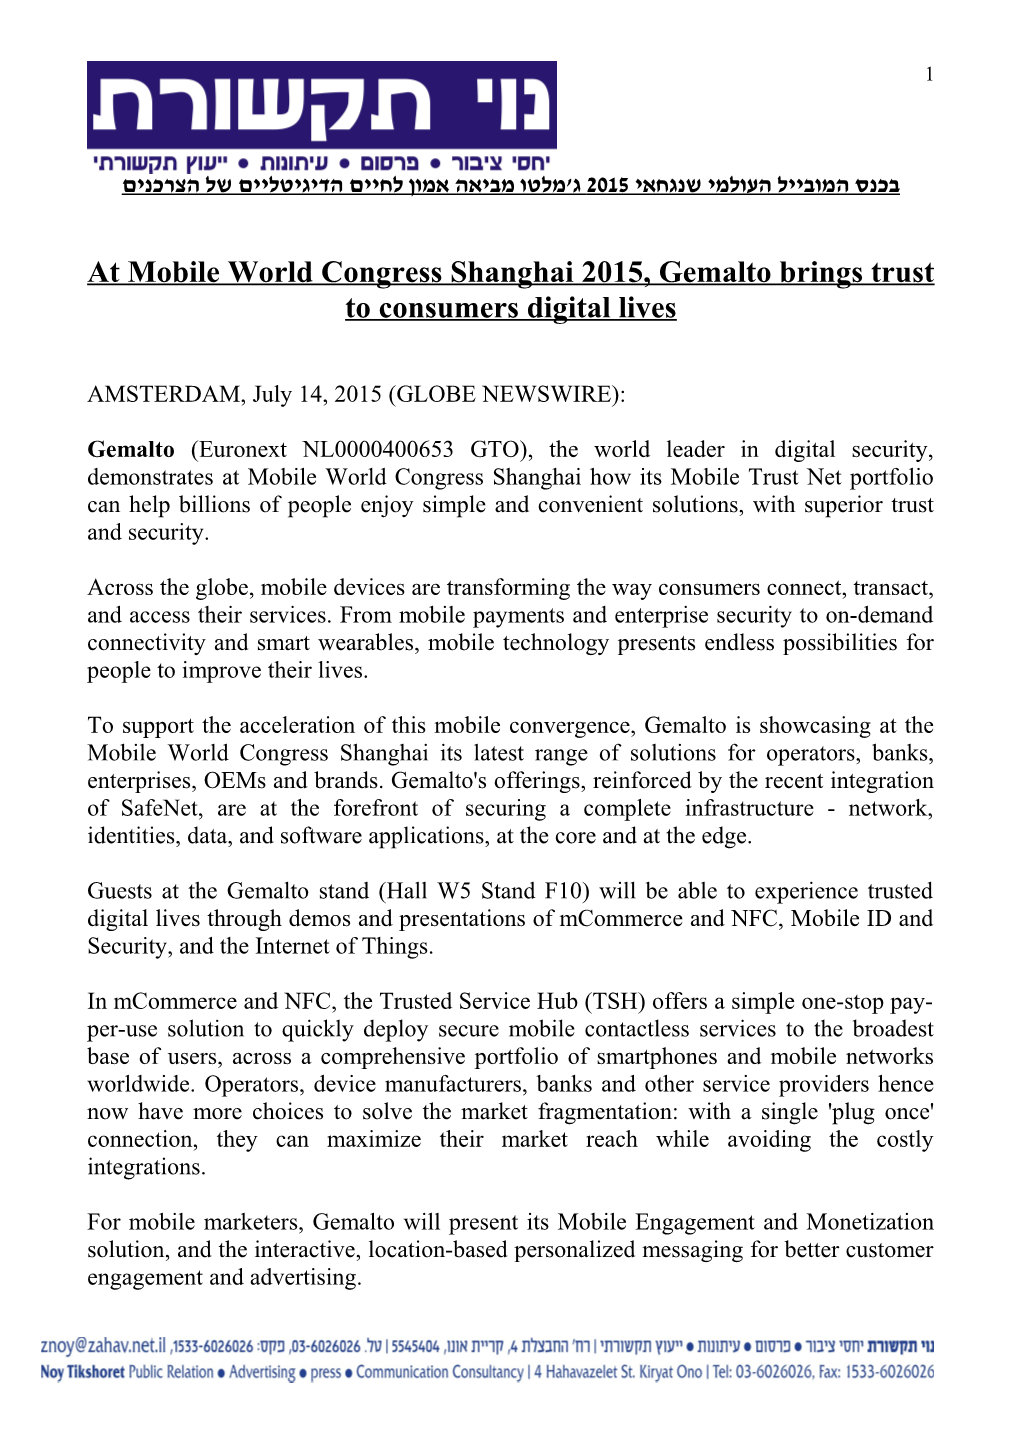 At Mobile World Congress Shanghai 2015, Gemalto Brings Trust to Consumers Digital Lives